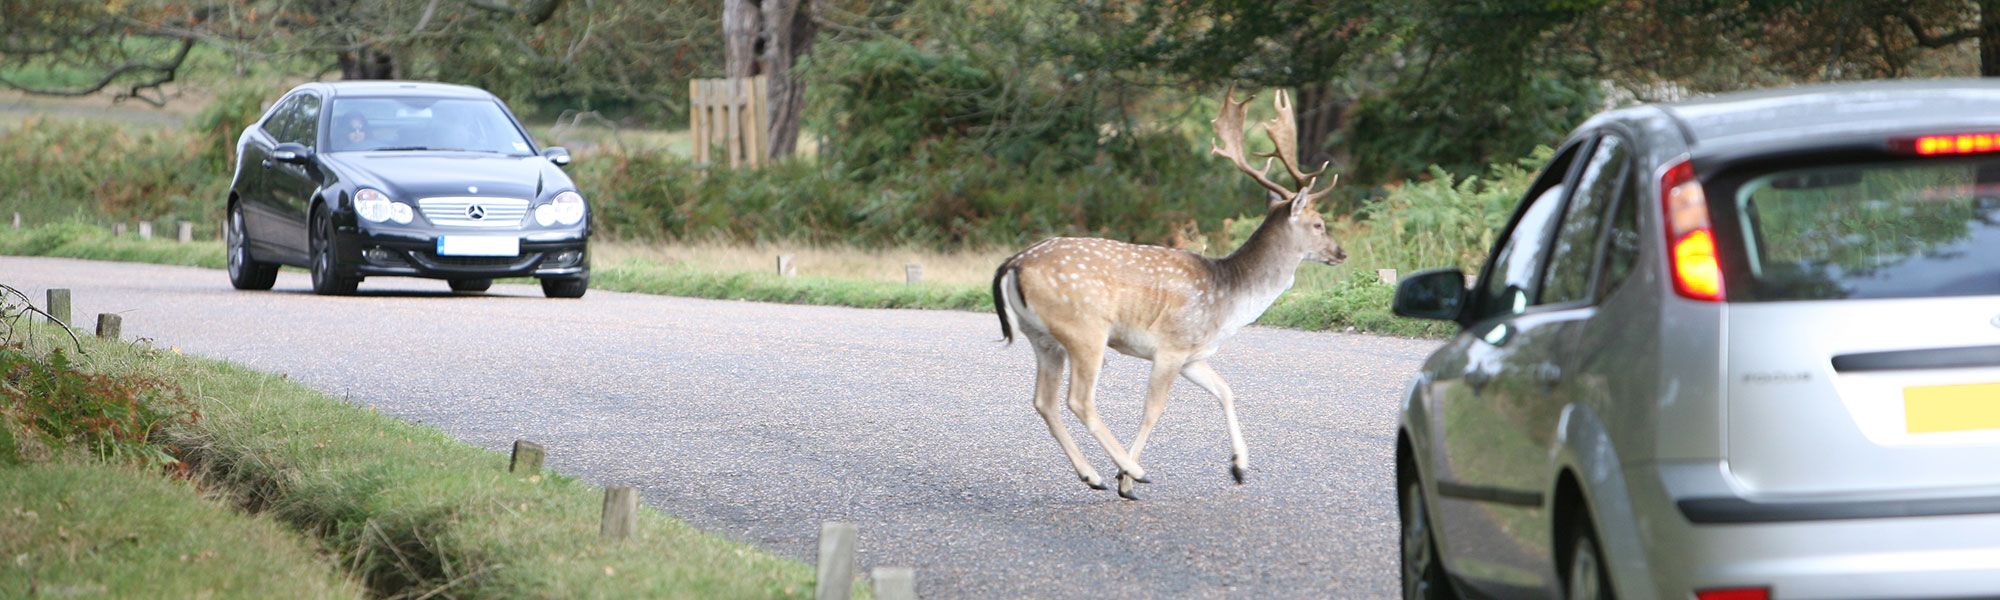 Deer on British roads